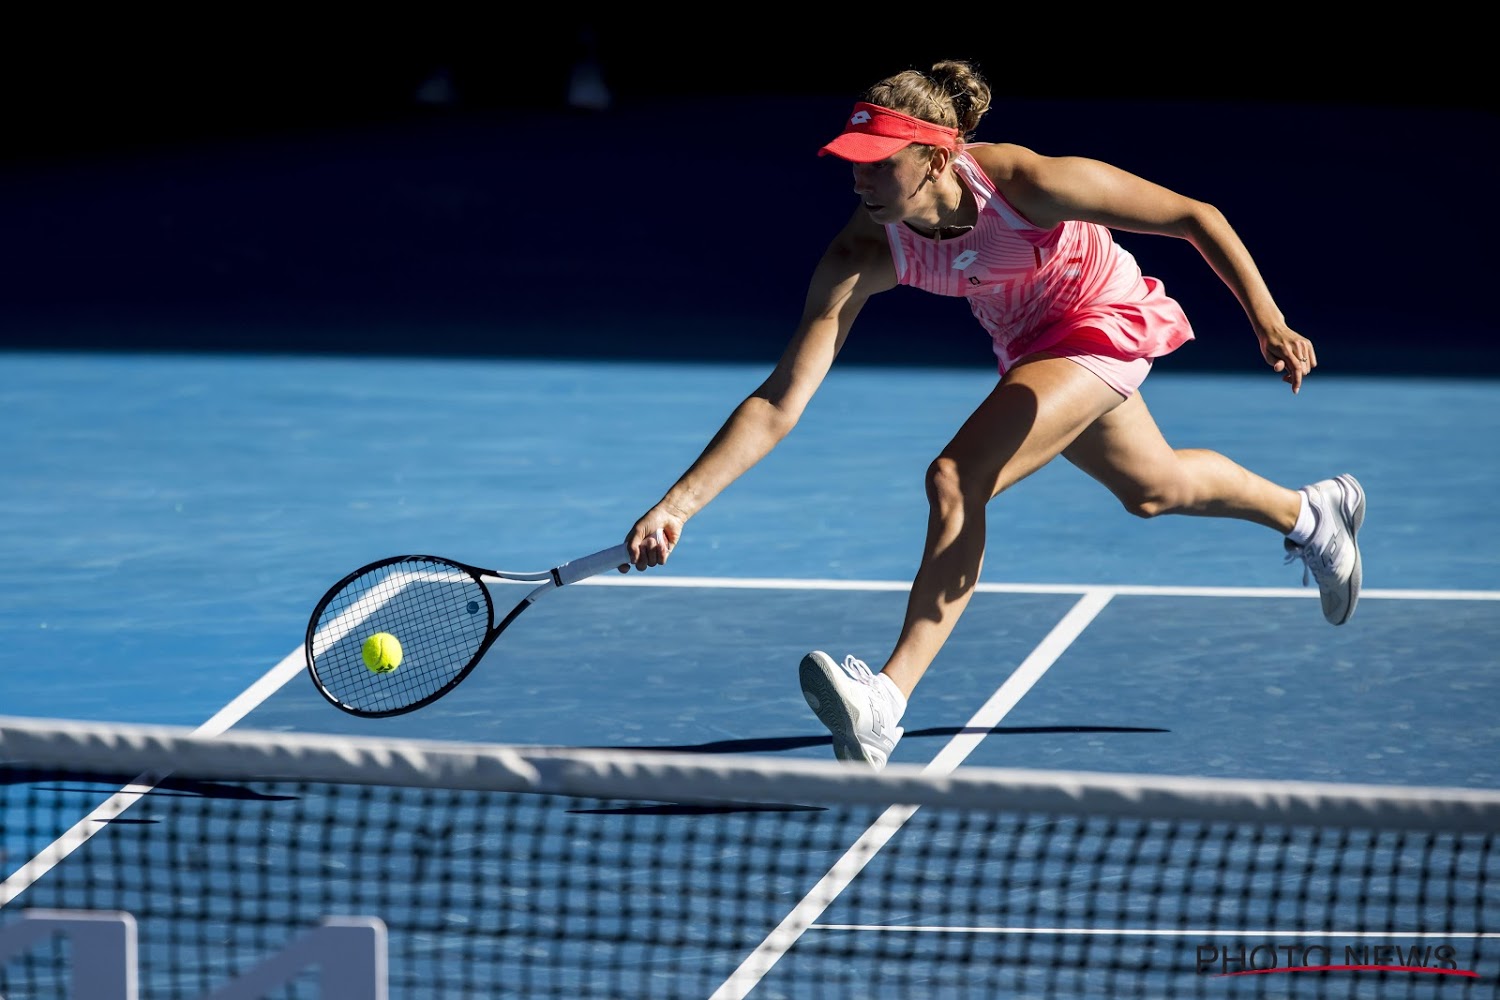 Elise Mertens and Arena Sabalenka into the Australian Open quarter-finals